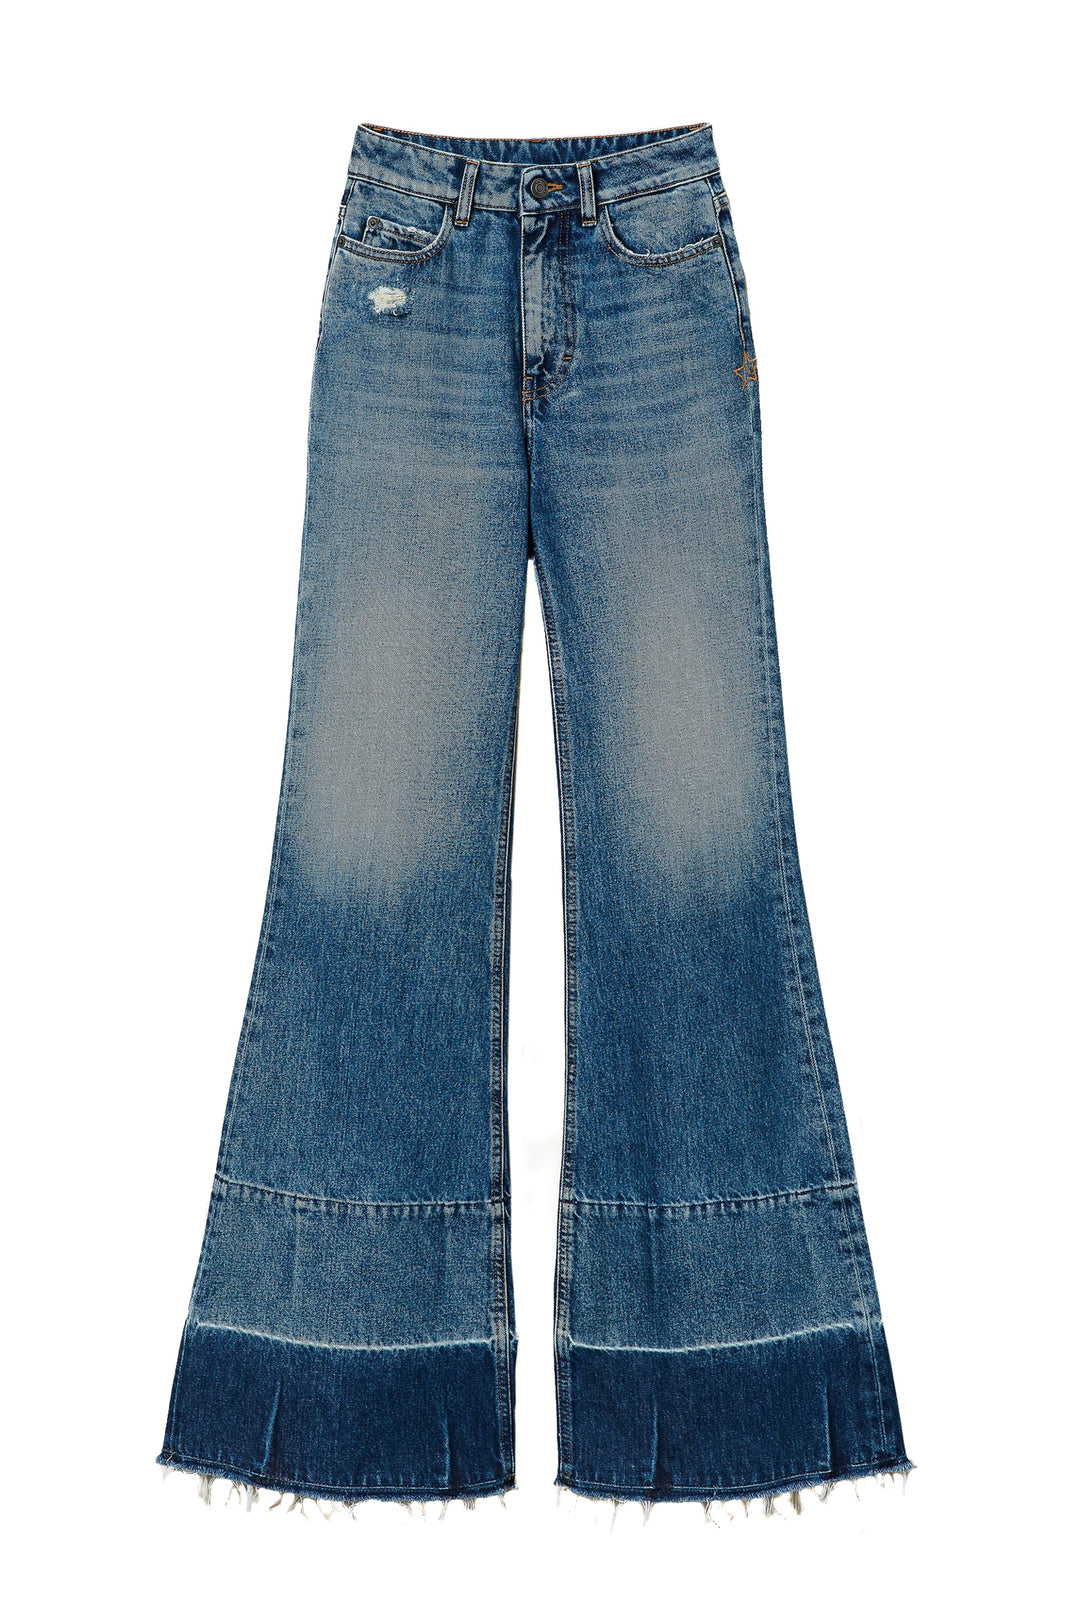 ACTITUDE TWINSET Jeans bell bottom con fondi sfrangiati - Mancinelli 1954